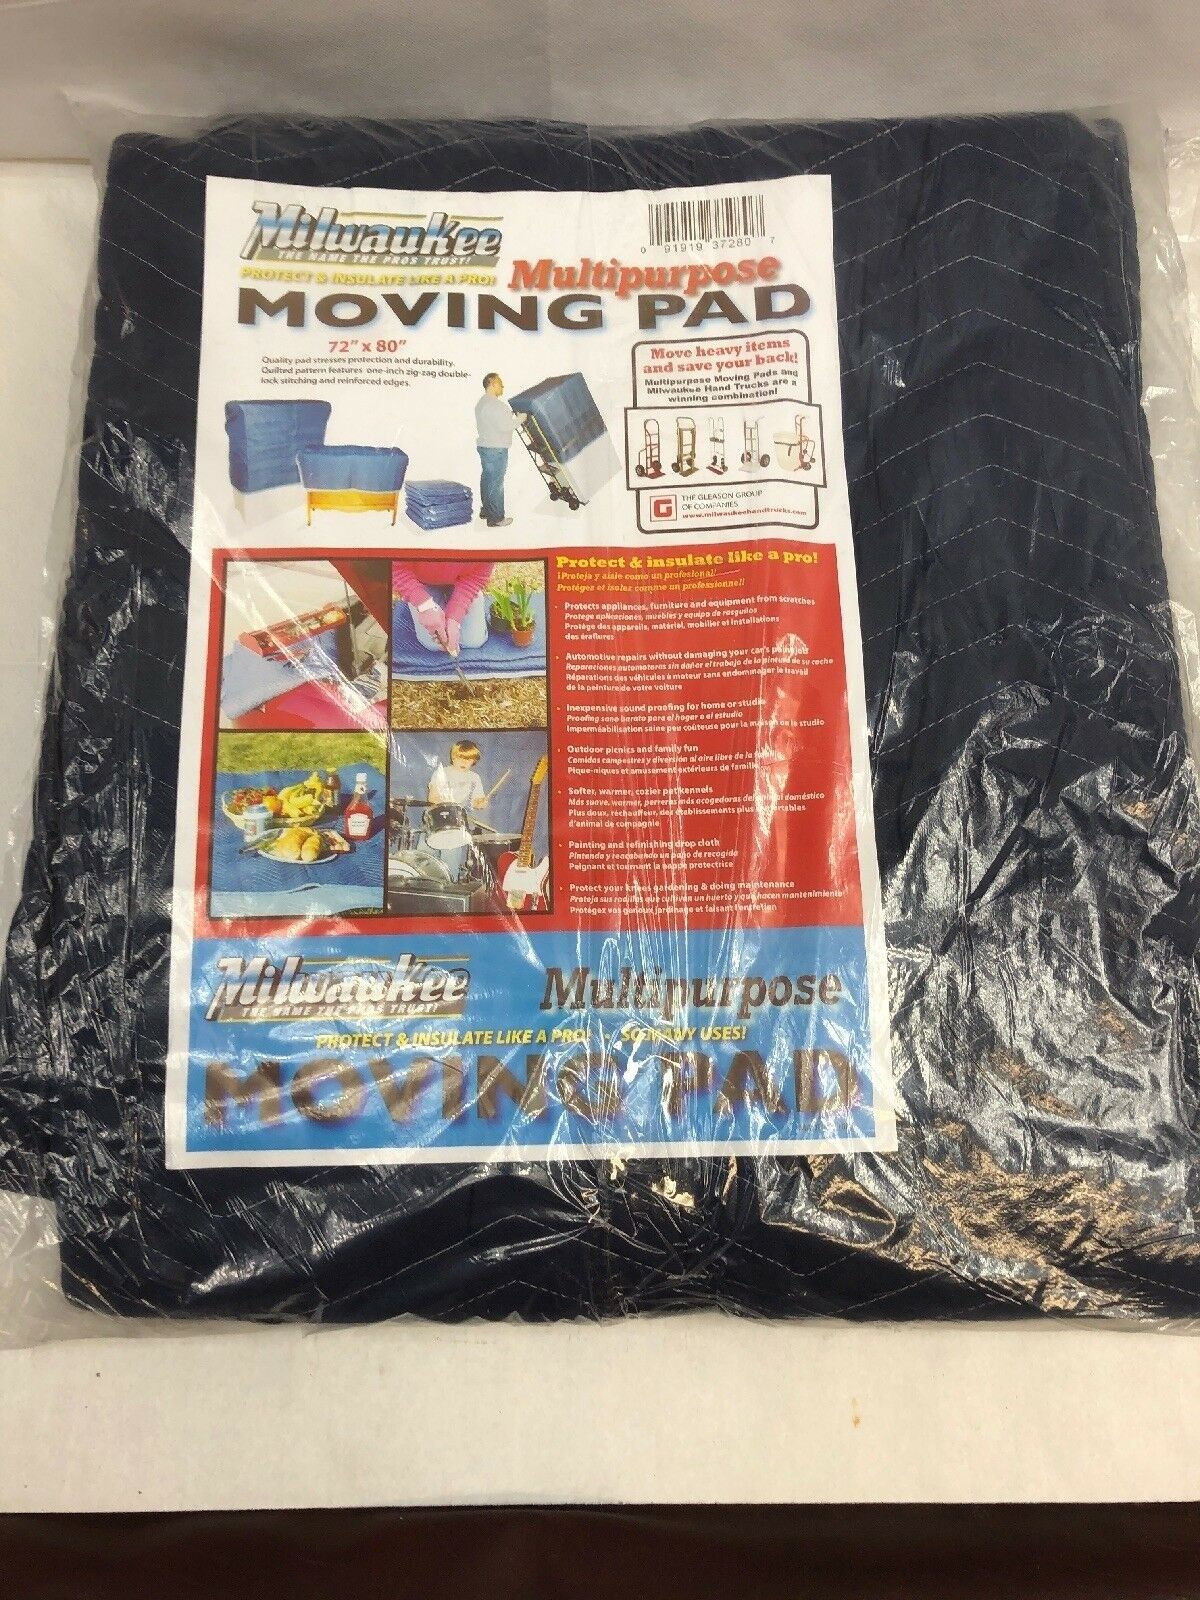 Milwaukee Multipurpose Moving Blanket Pad HOTT DEALS - 72 x 80 - LOT OF 2 Gleason Industrial Prd 37280